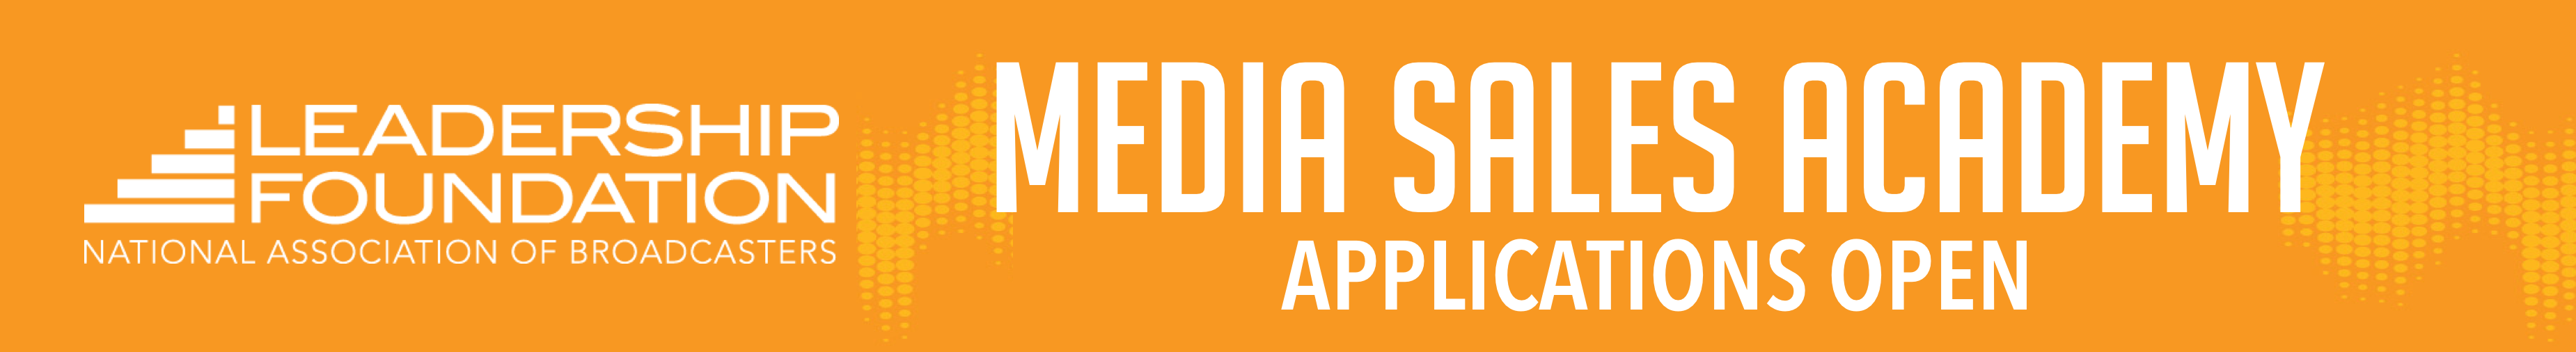 Media Sales Academy Applications open April 2022